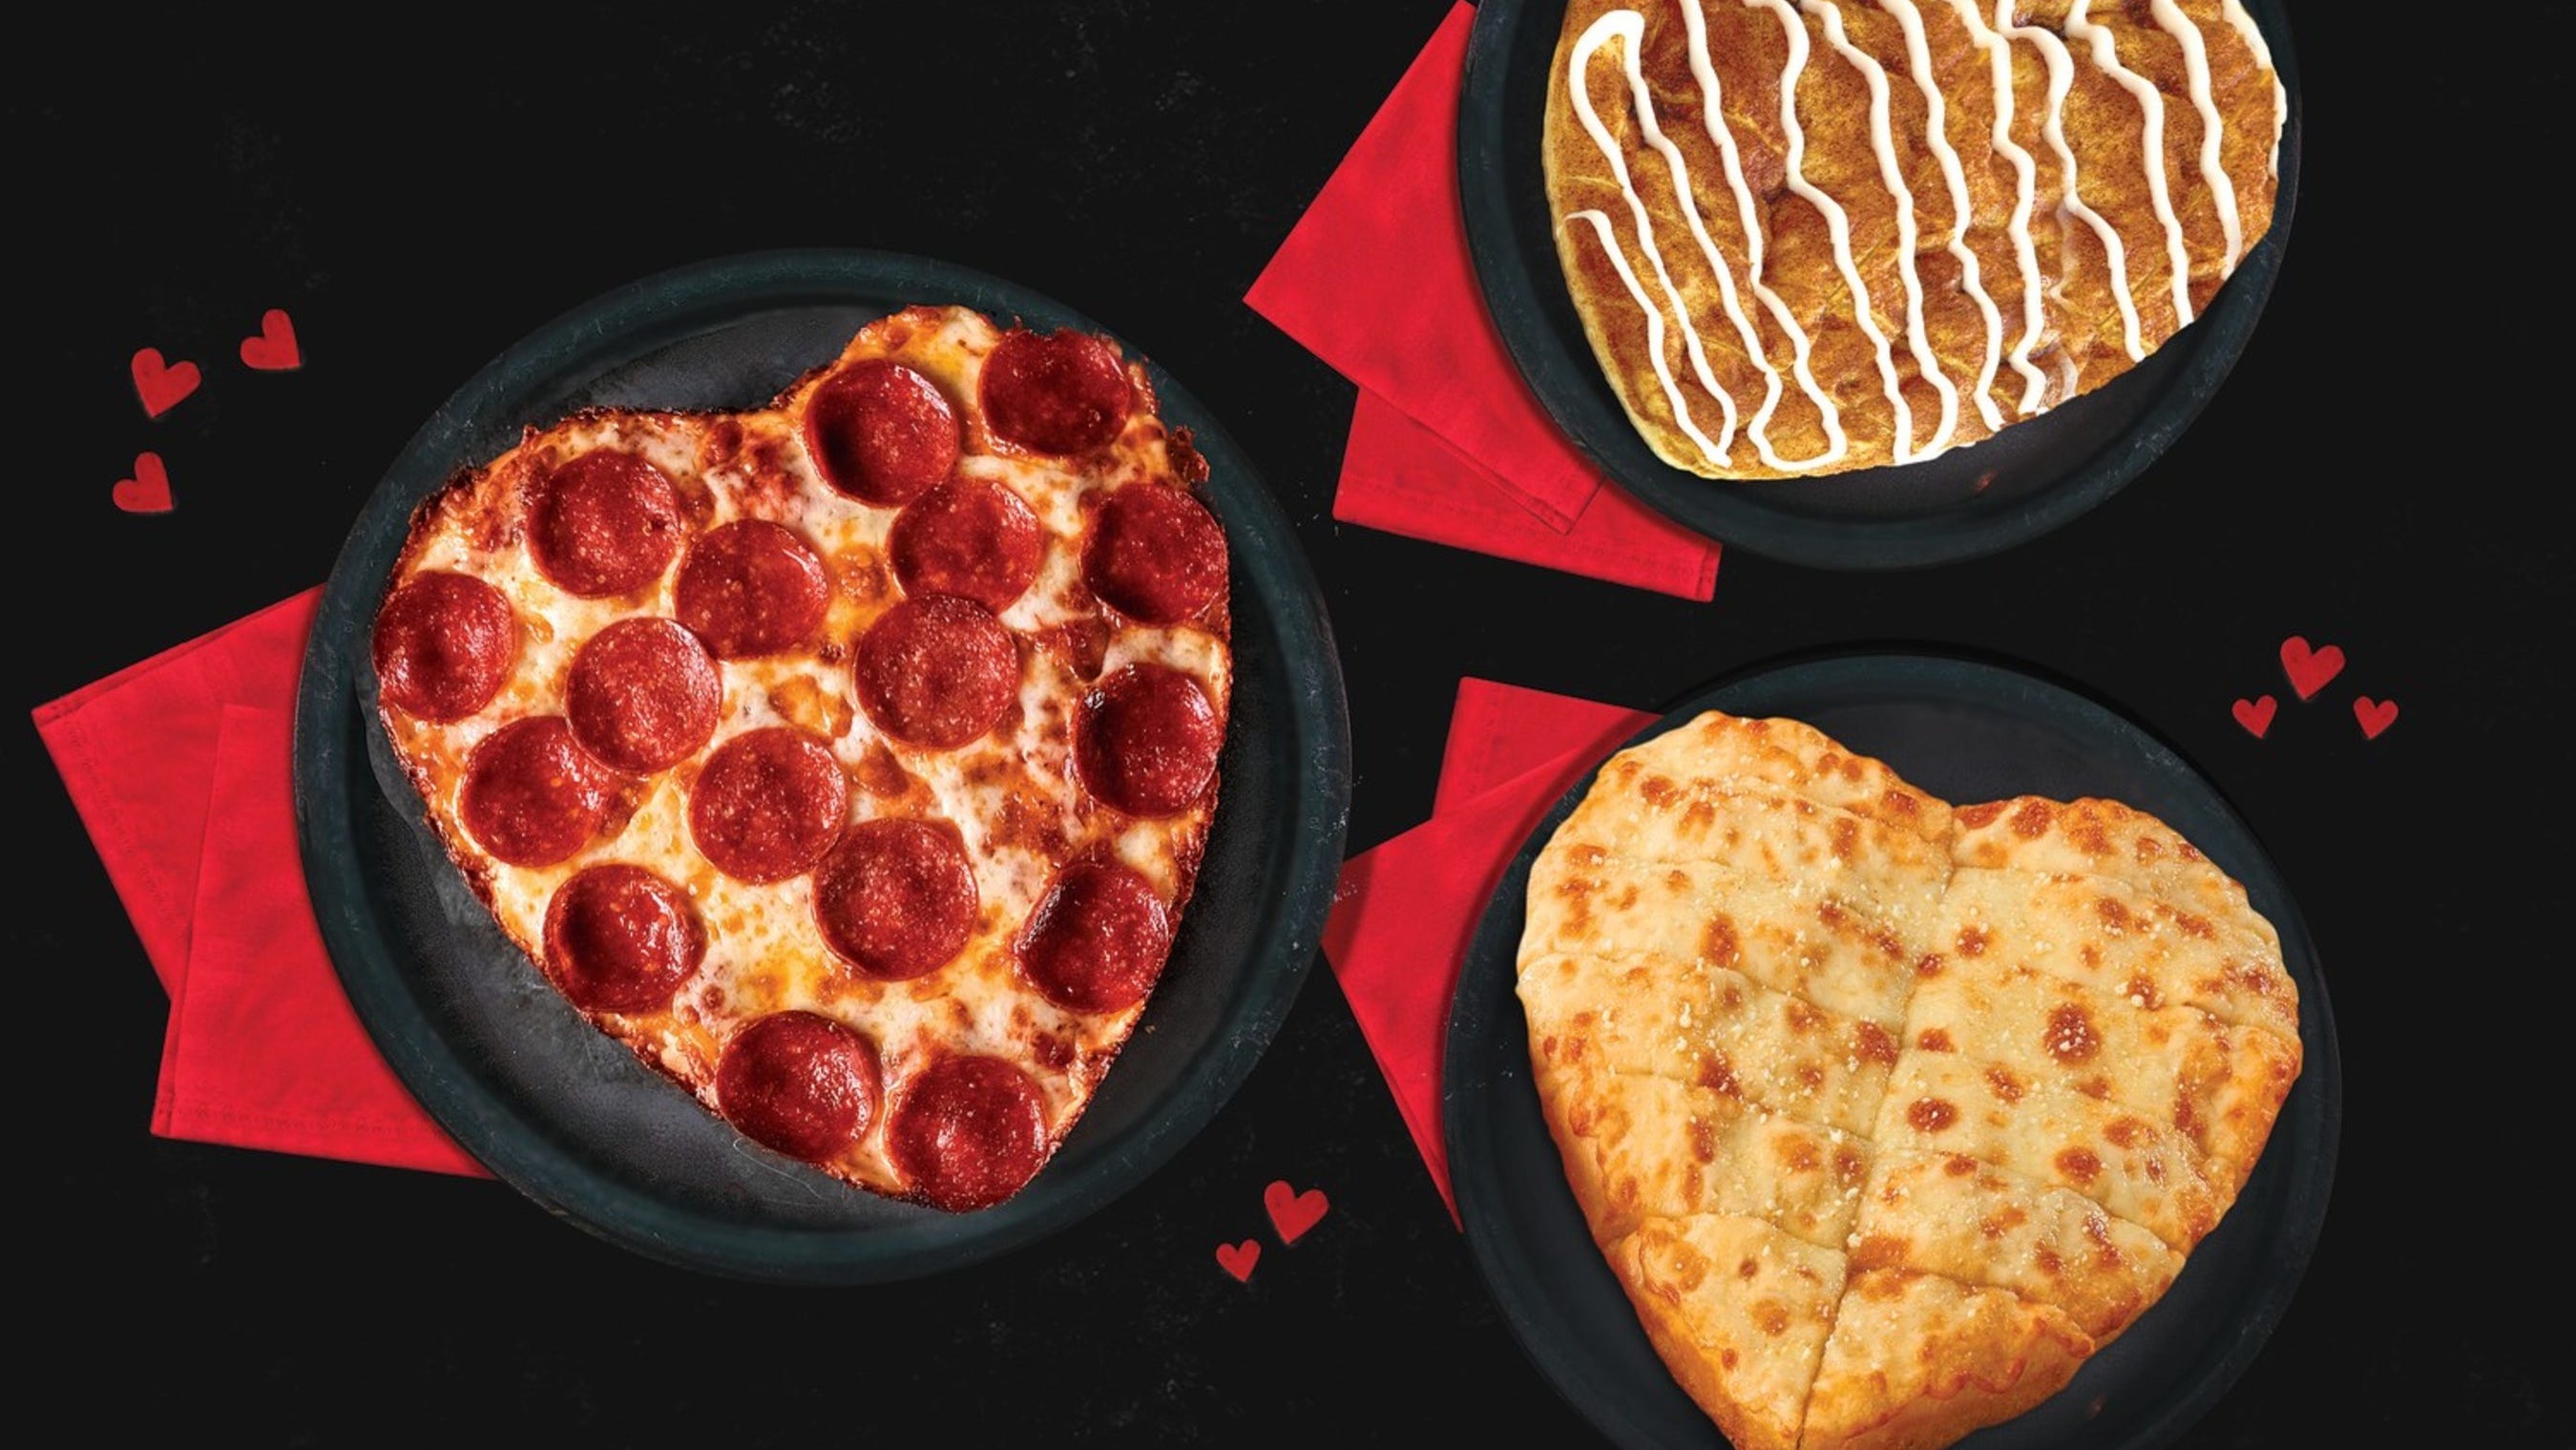 Heart pizza on Valentine's Day menu at Pizza Hut, Papa John's Sunday